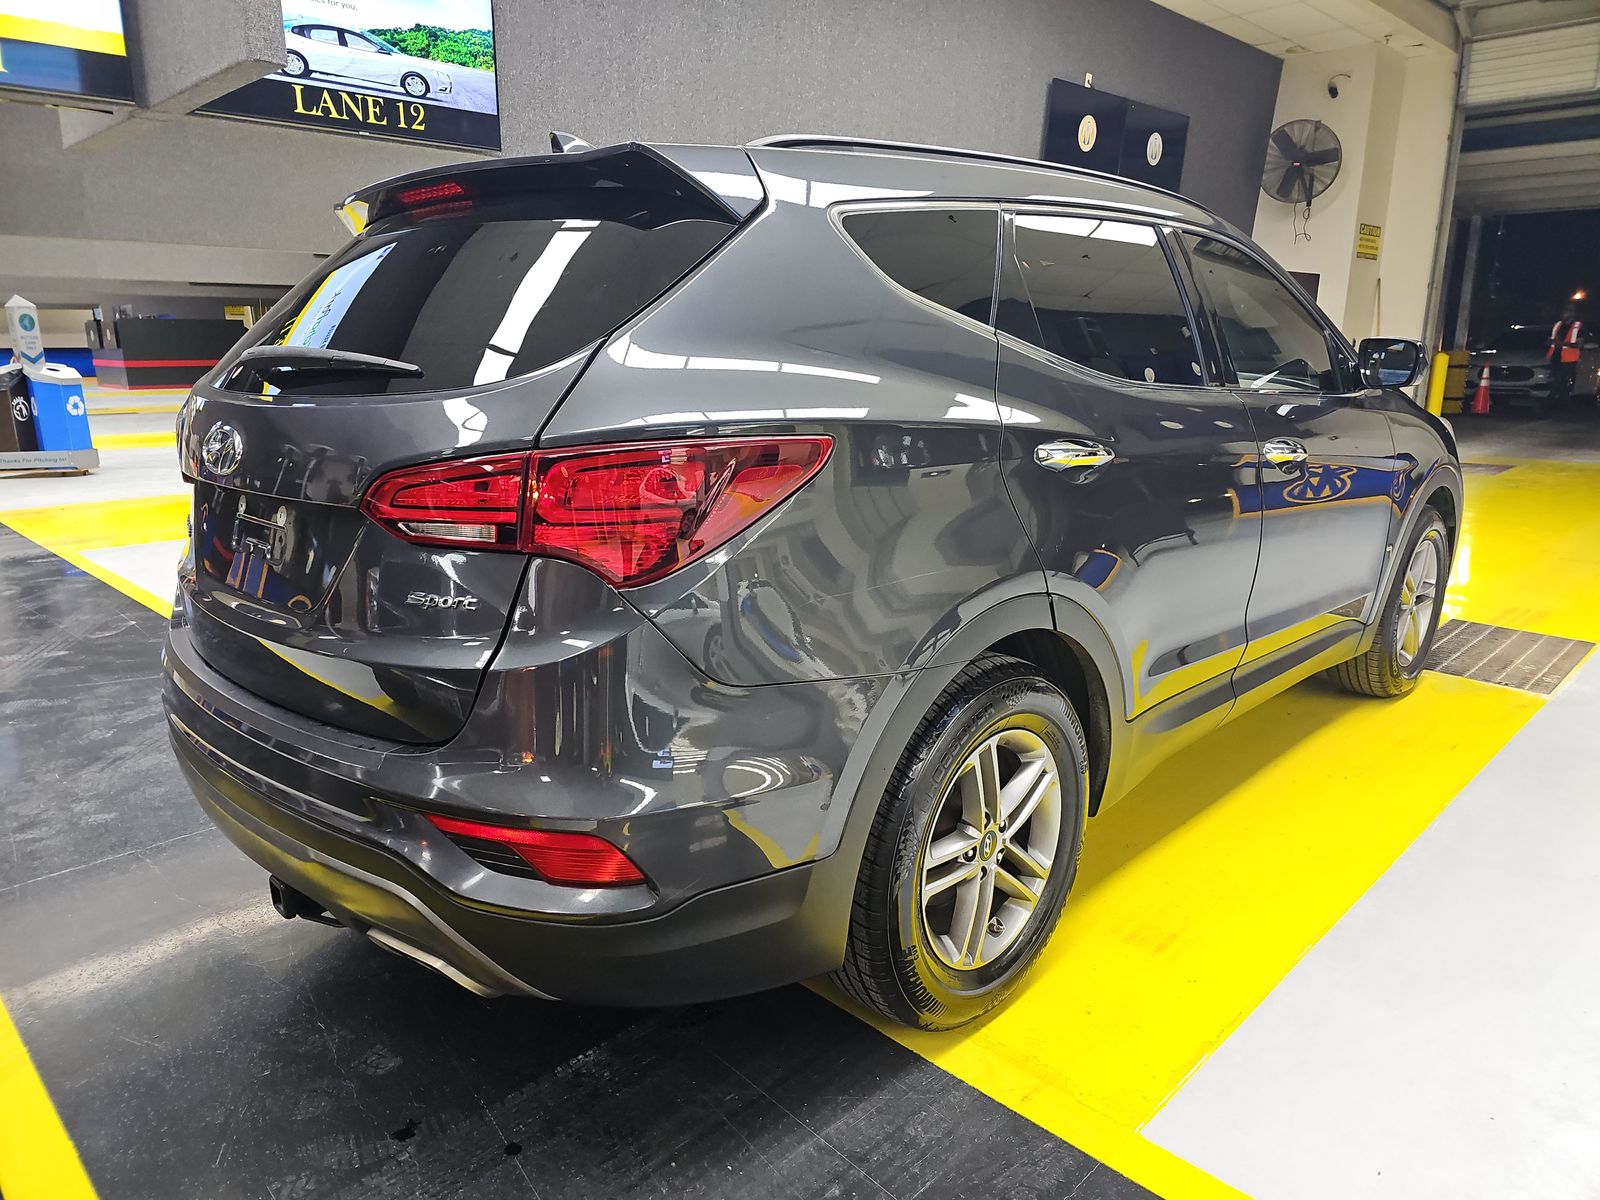 2017 Hyundai Santa Fe Sport 2.4L FWD